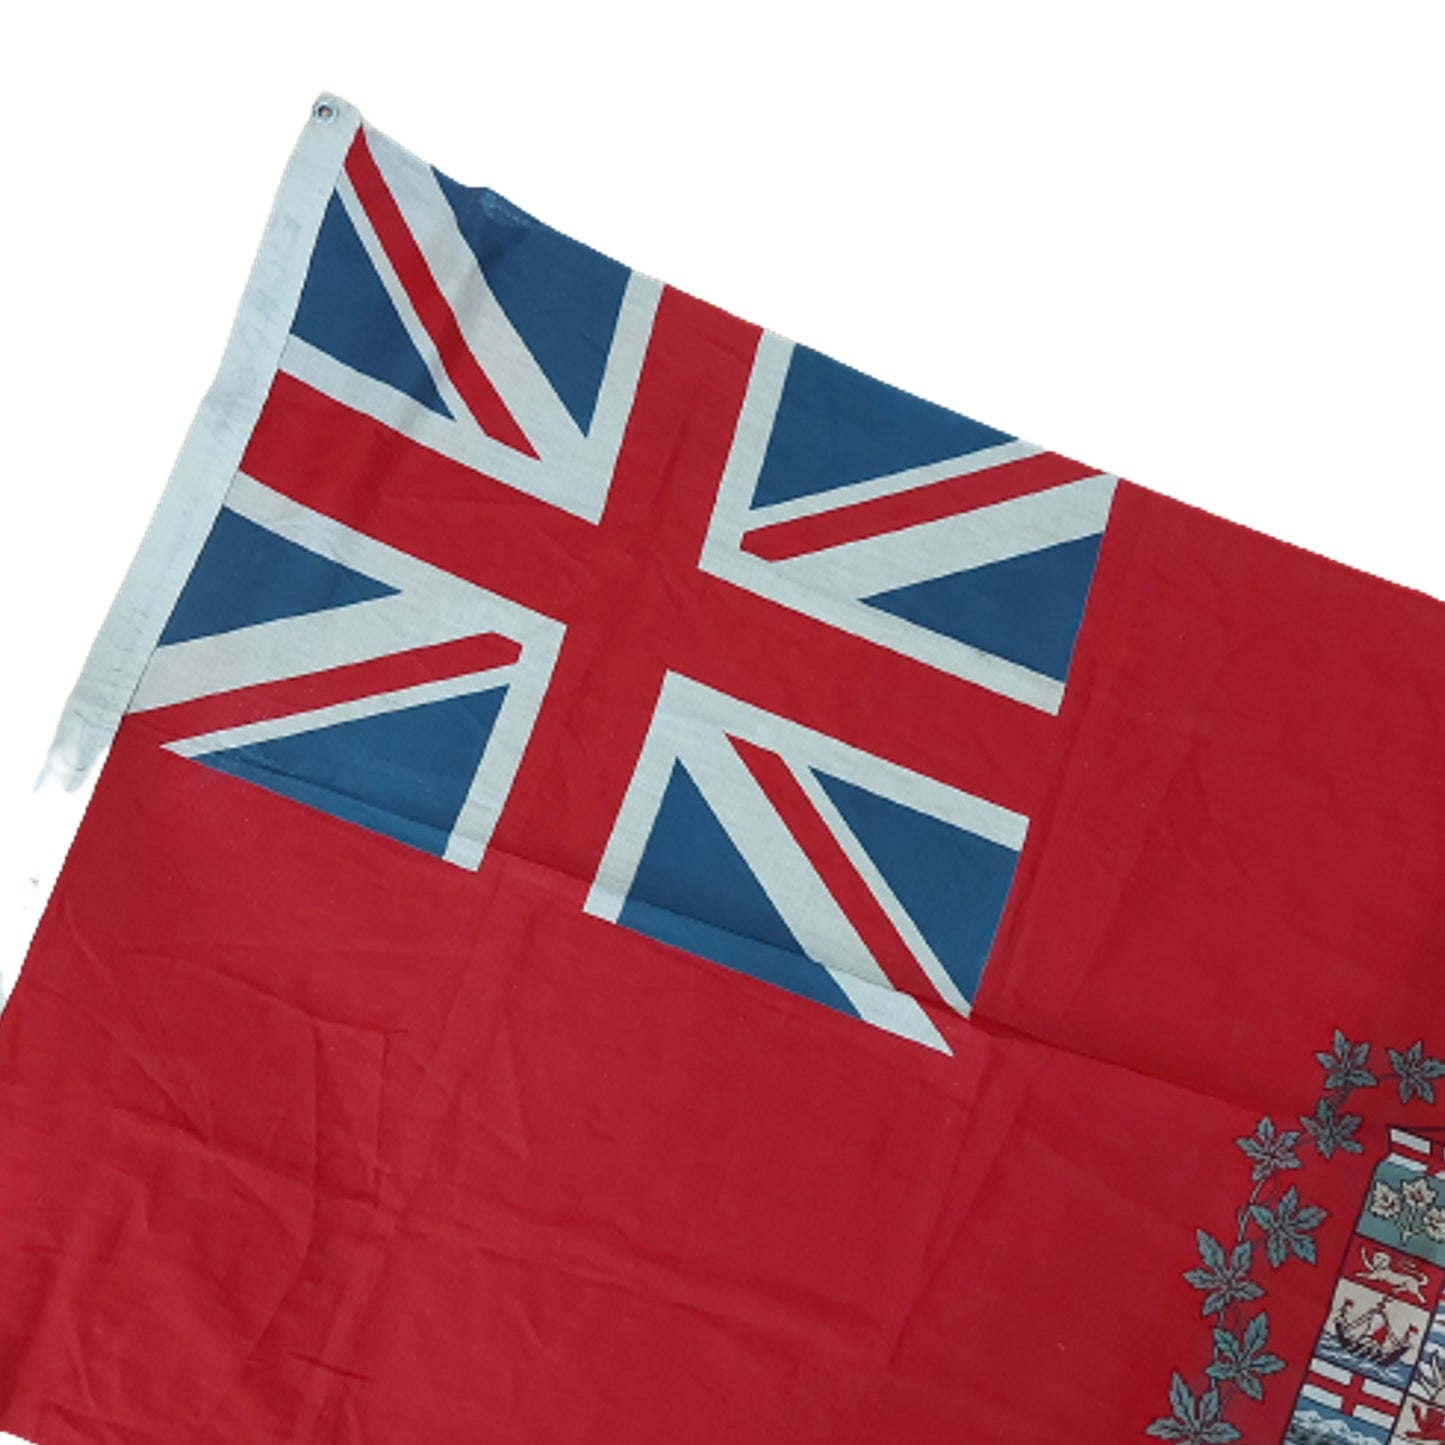 WW1 Canadian Flag 51 x 36 Inches